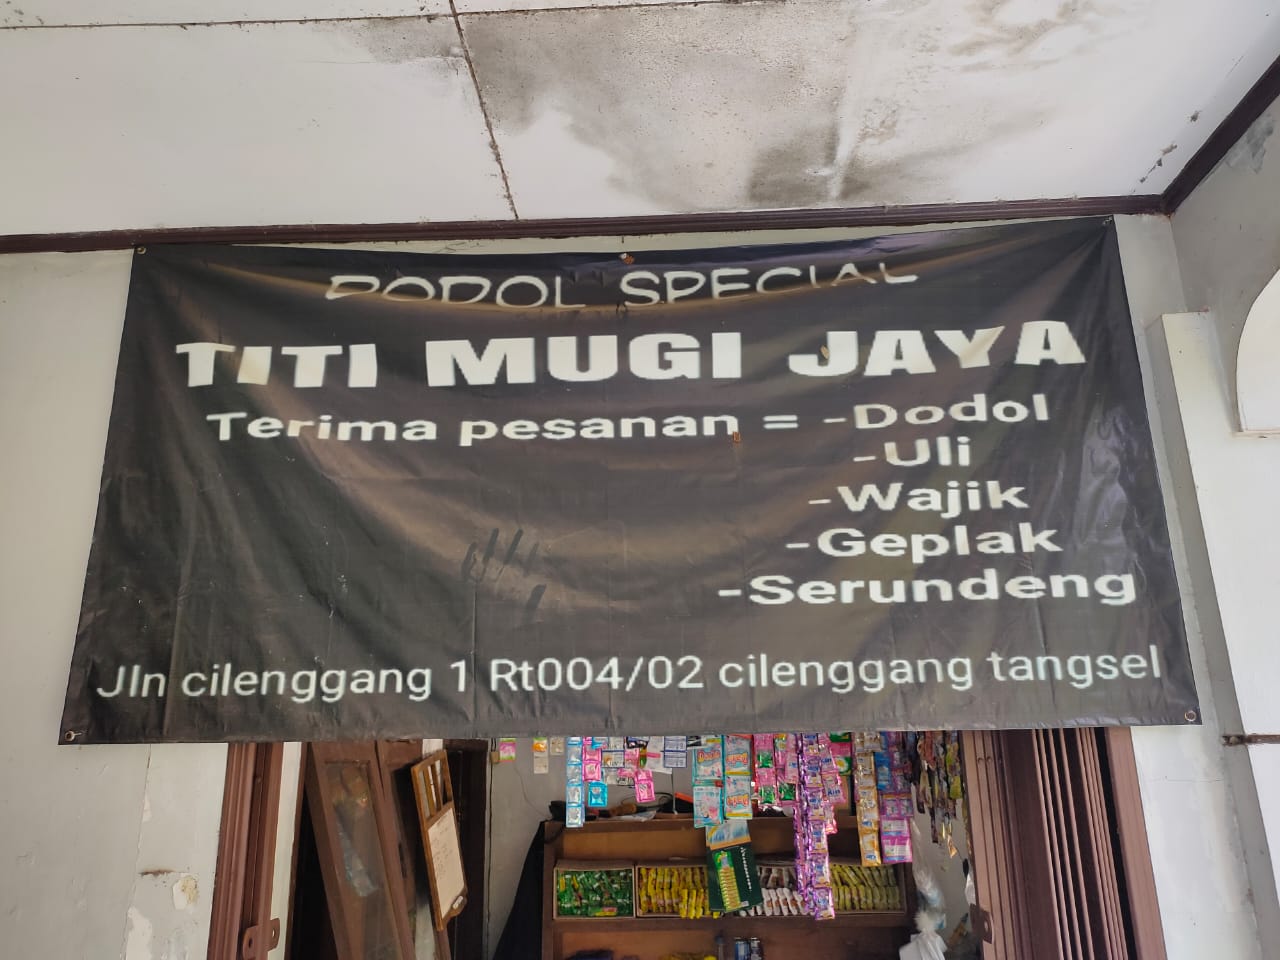 Spanduk Titi Mugi Jaya.